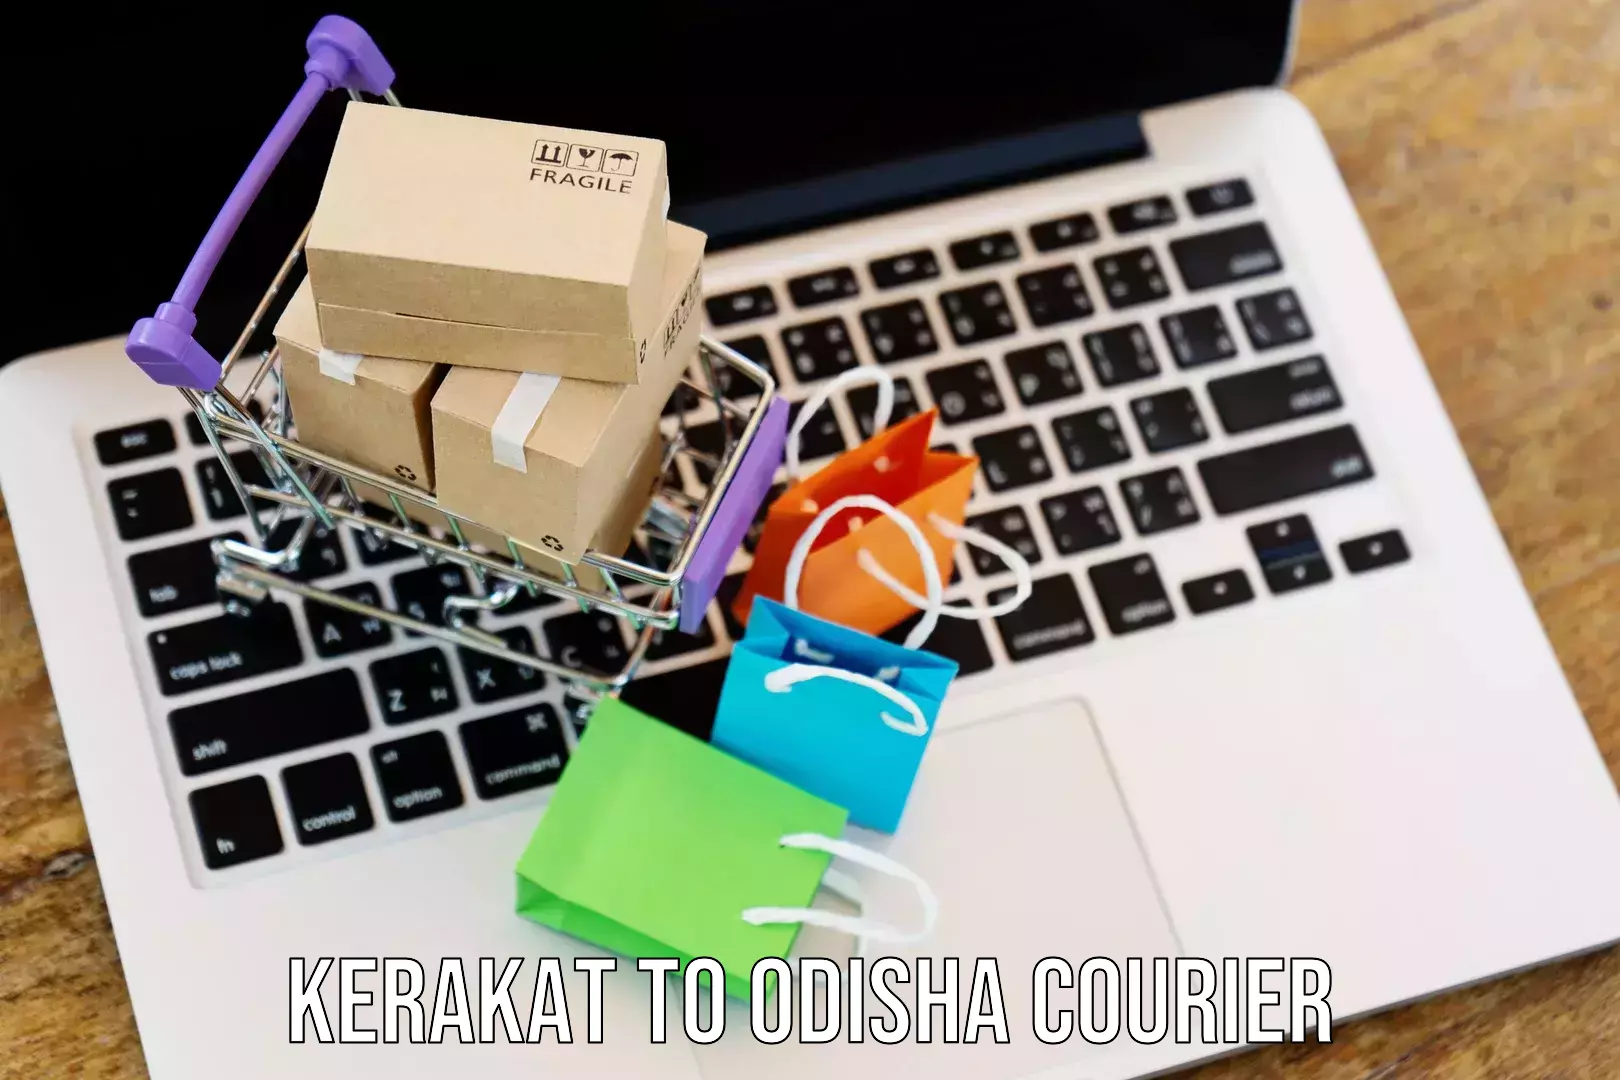 Nationwide courier service Kerakat to Odisha